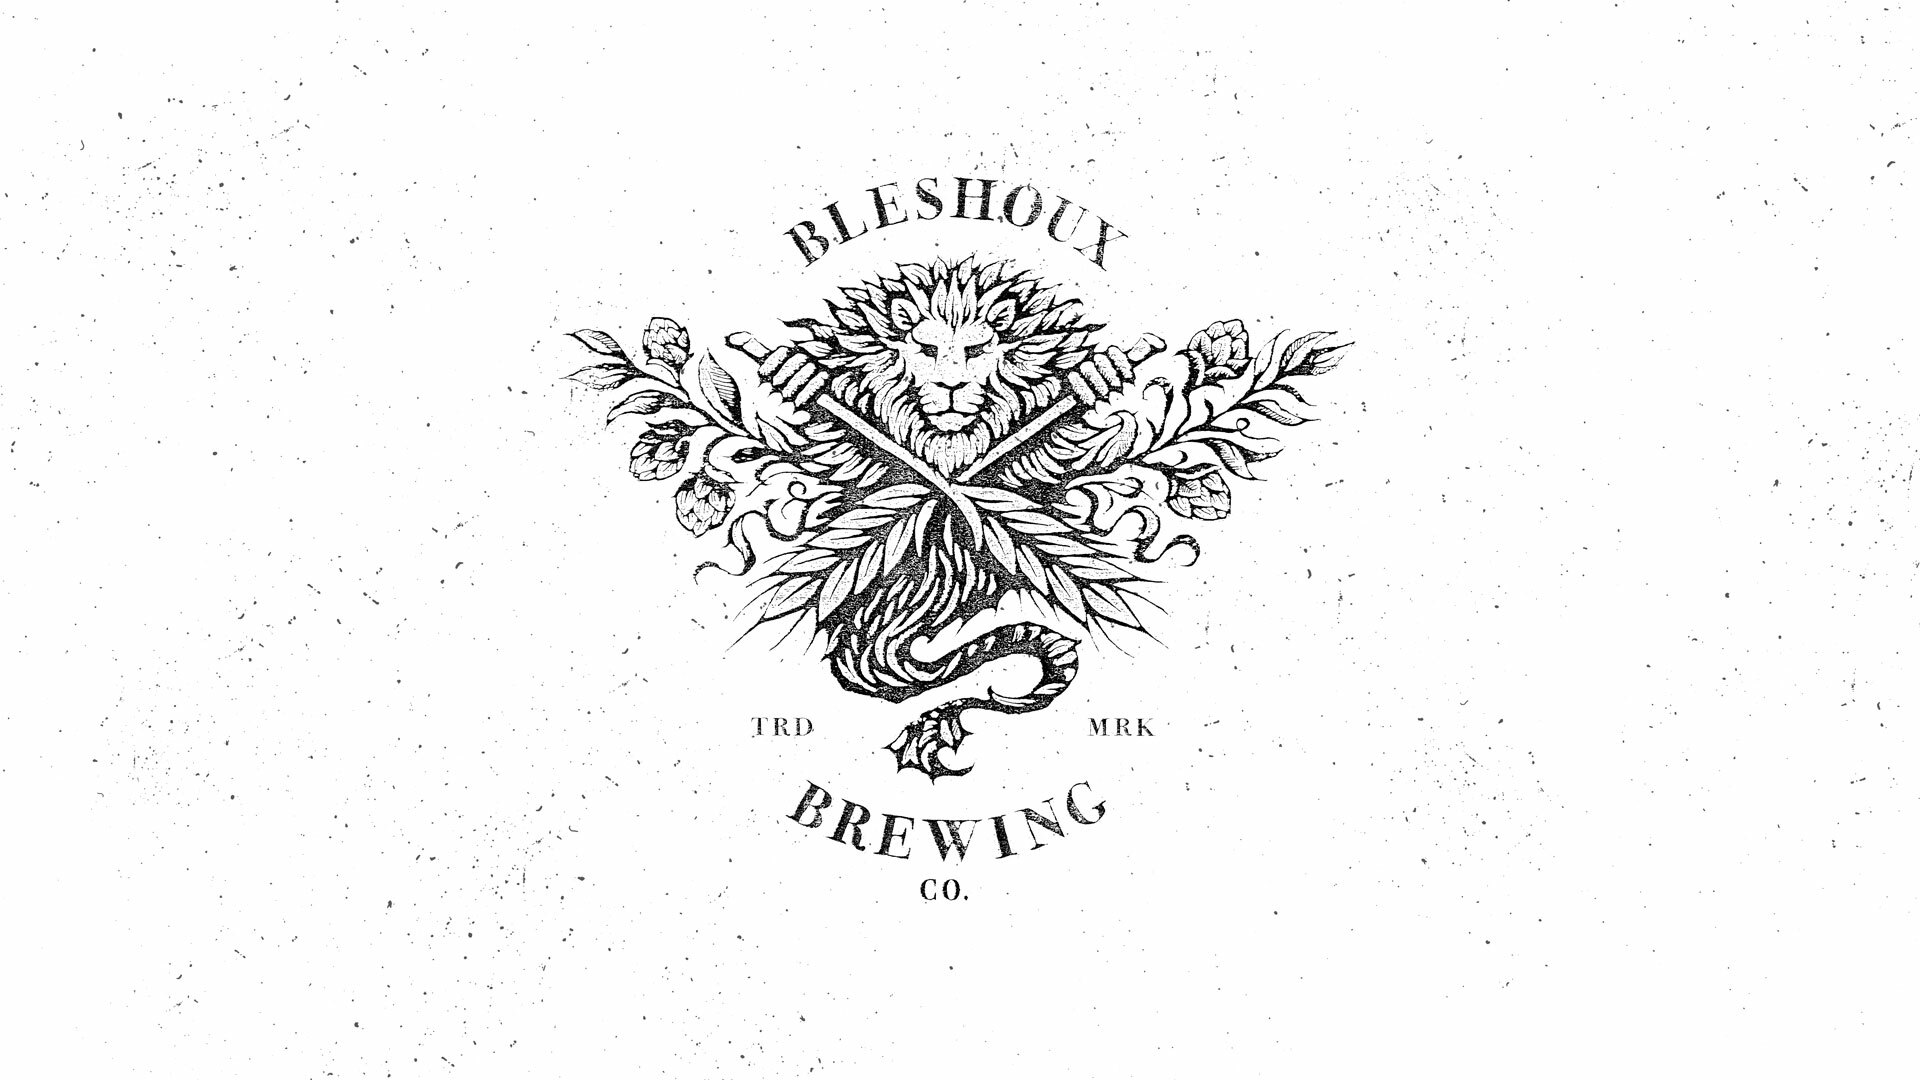 Bleshoux Brewing 1